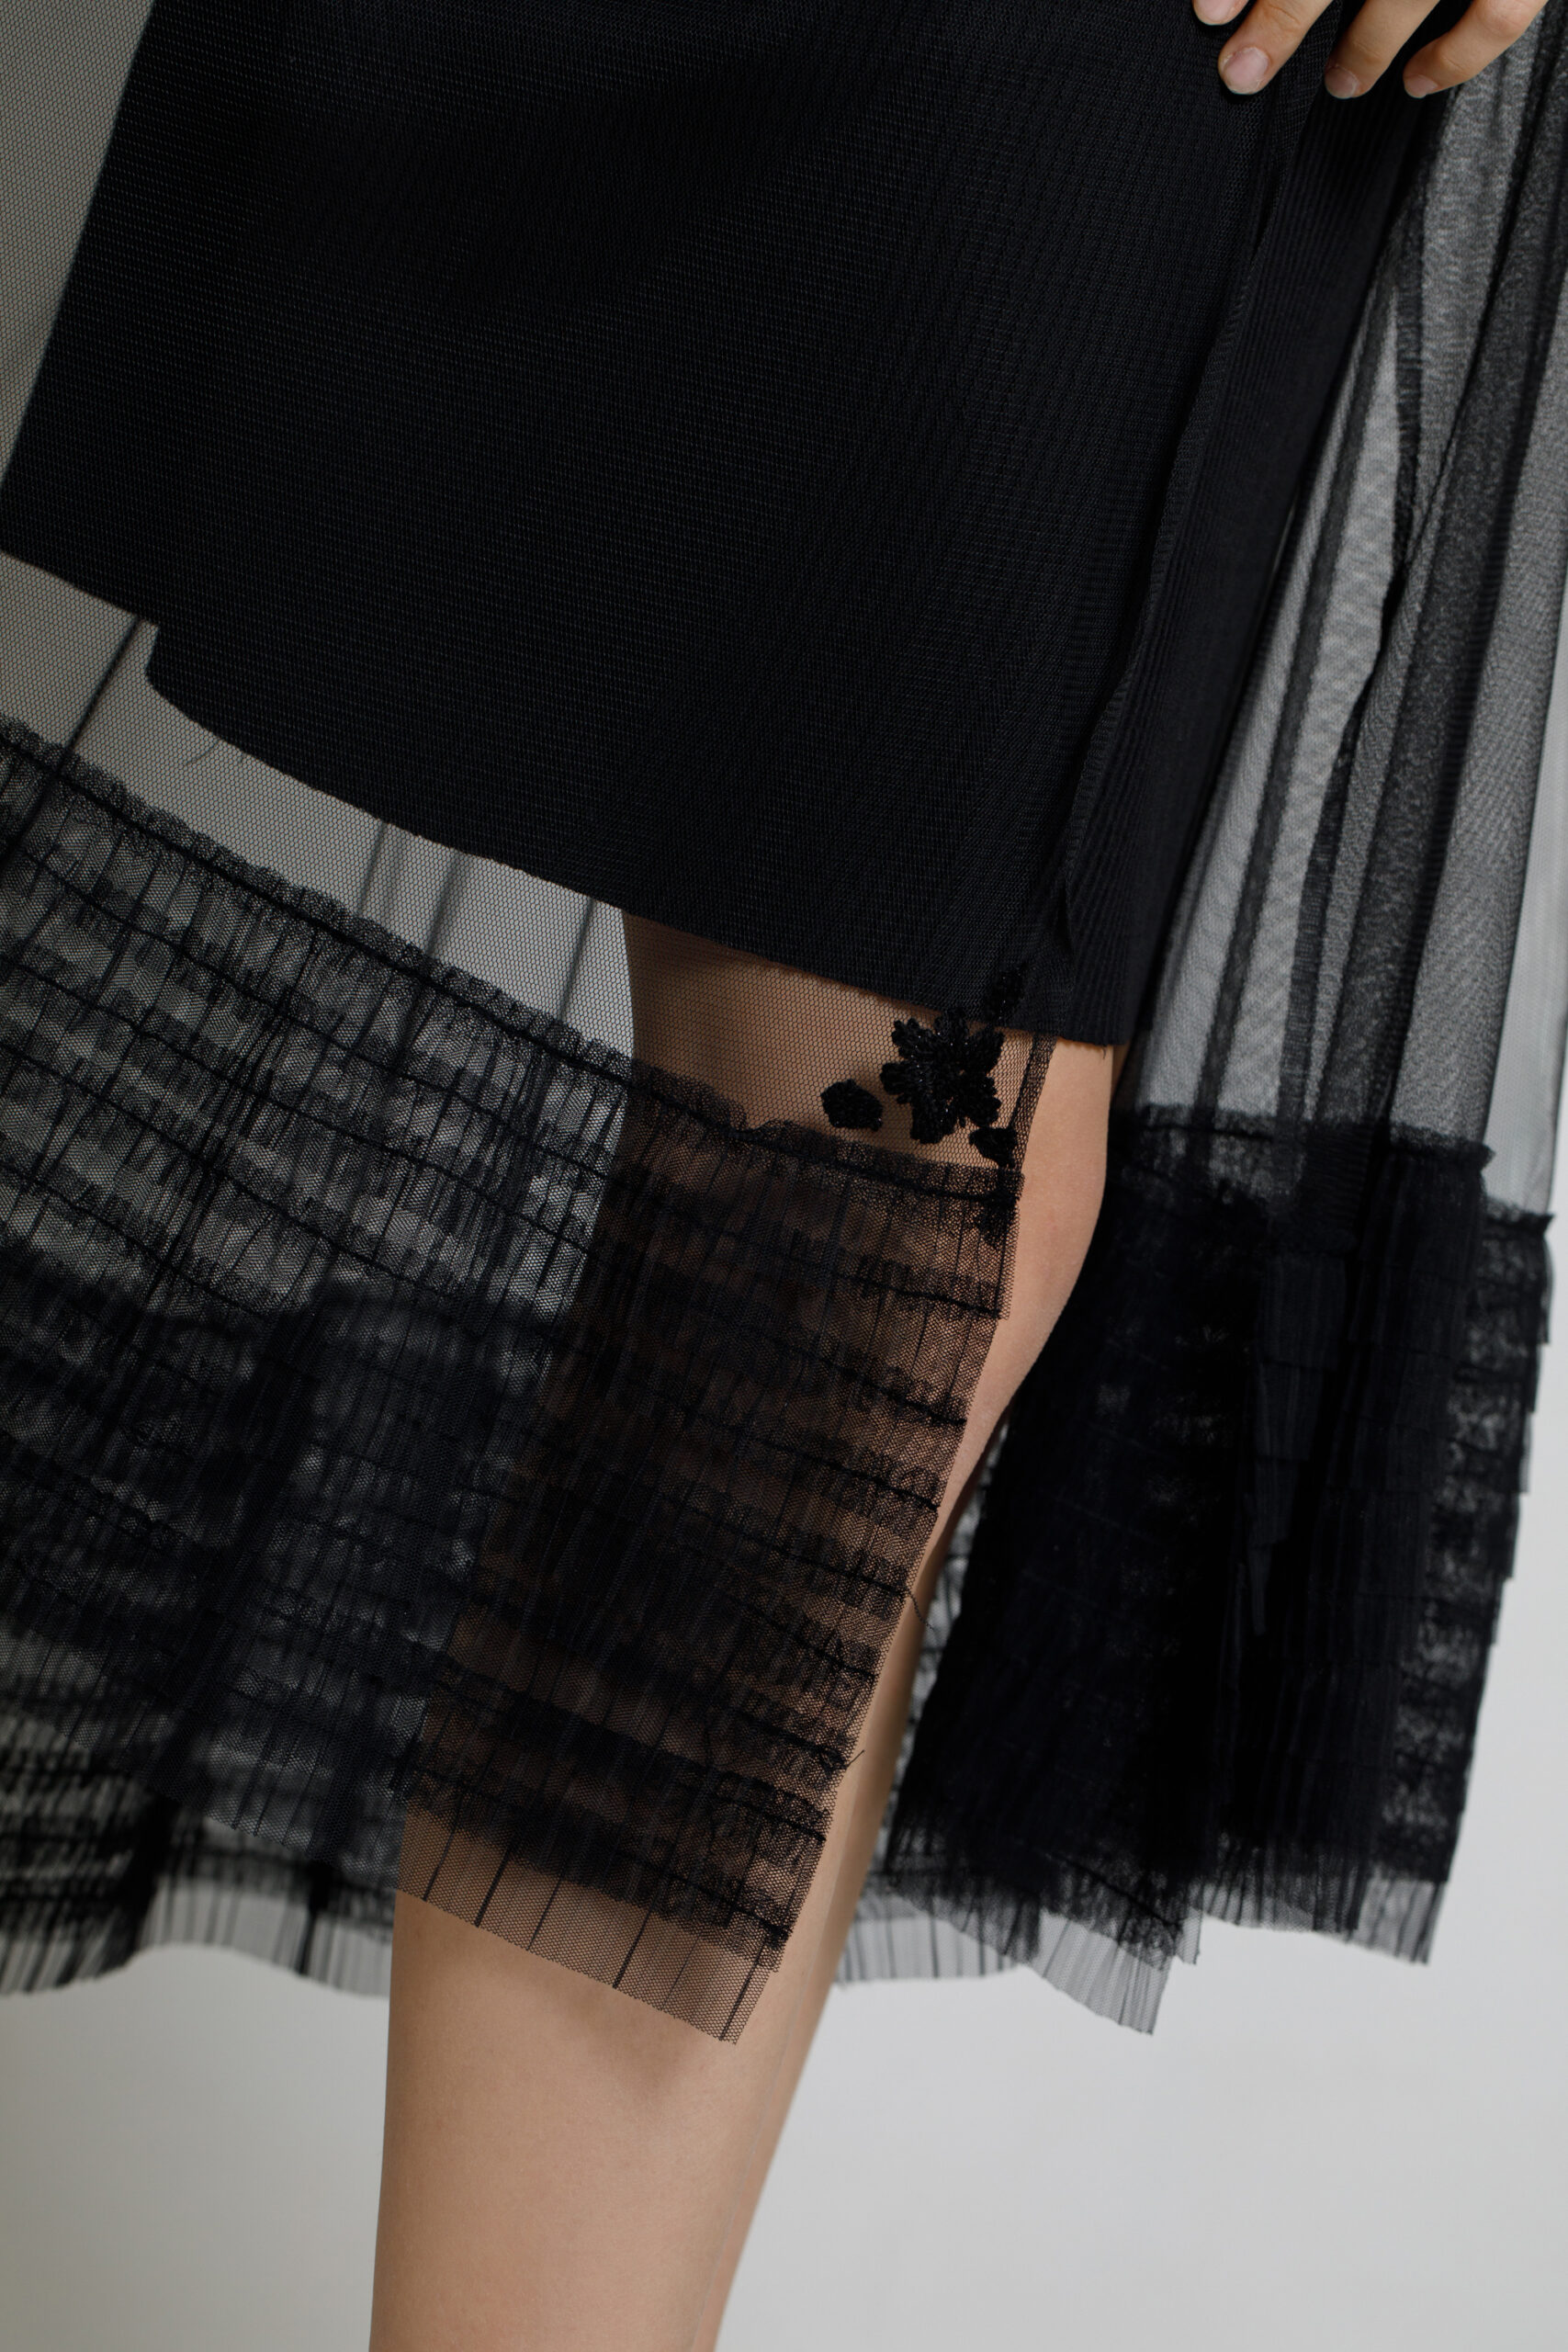 NAVY Elegant black dress with tulle train. Natural fabrics, original design, handmade embroidery